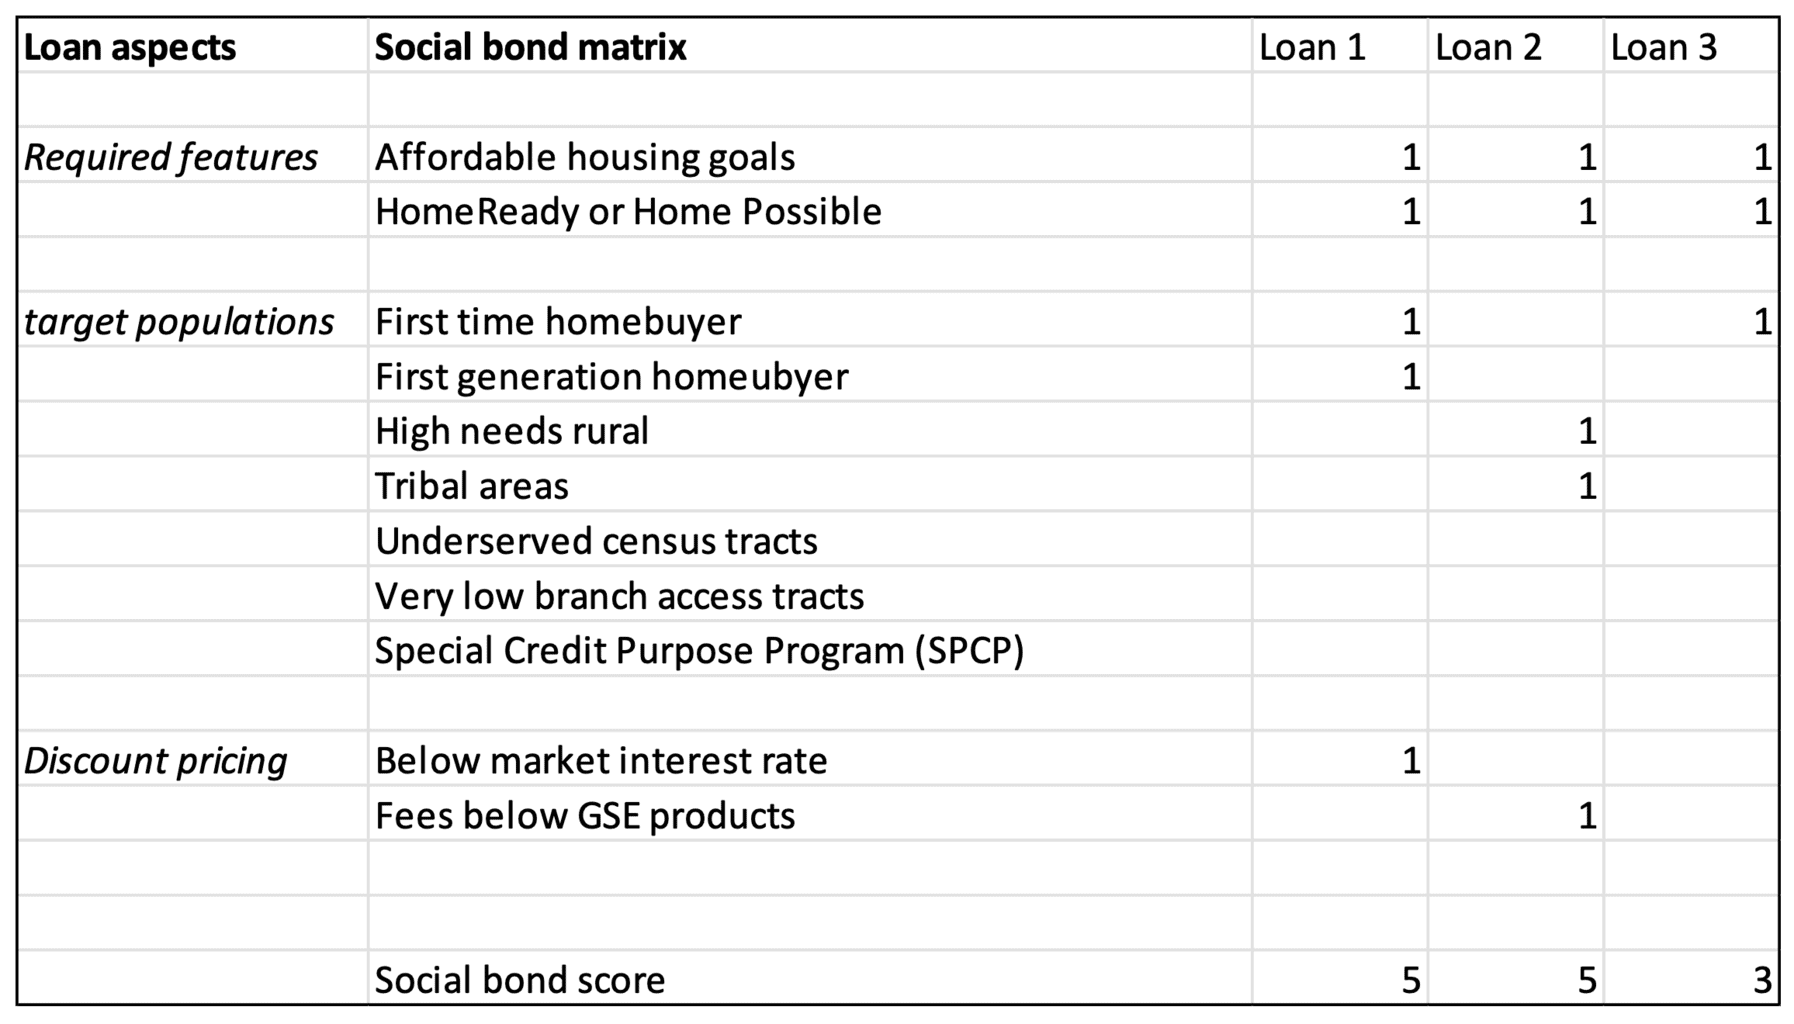 Qualifying Loans for Social Bond Designation